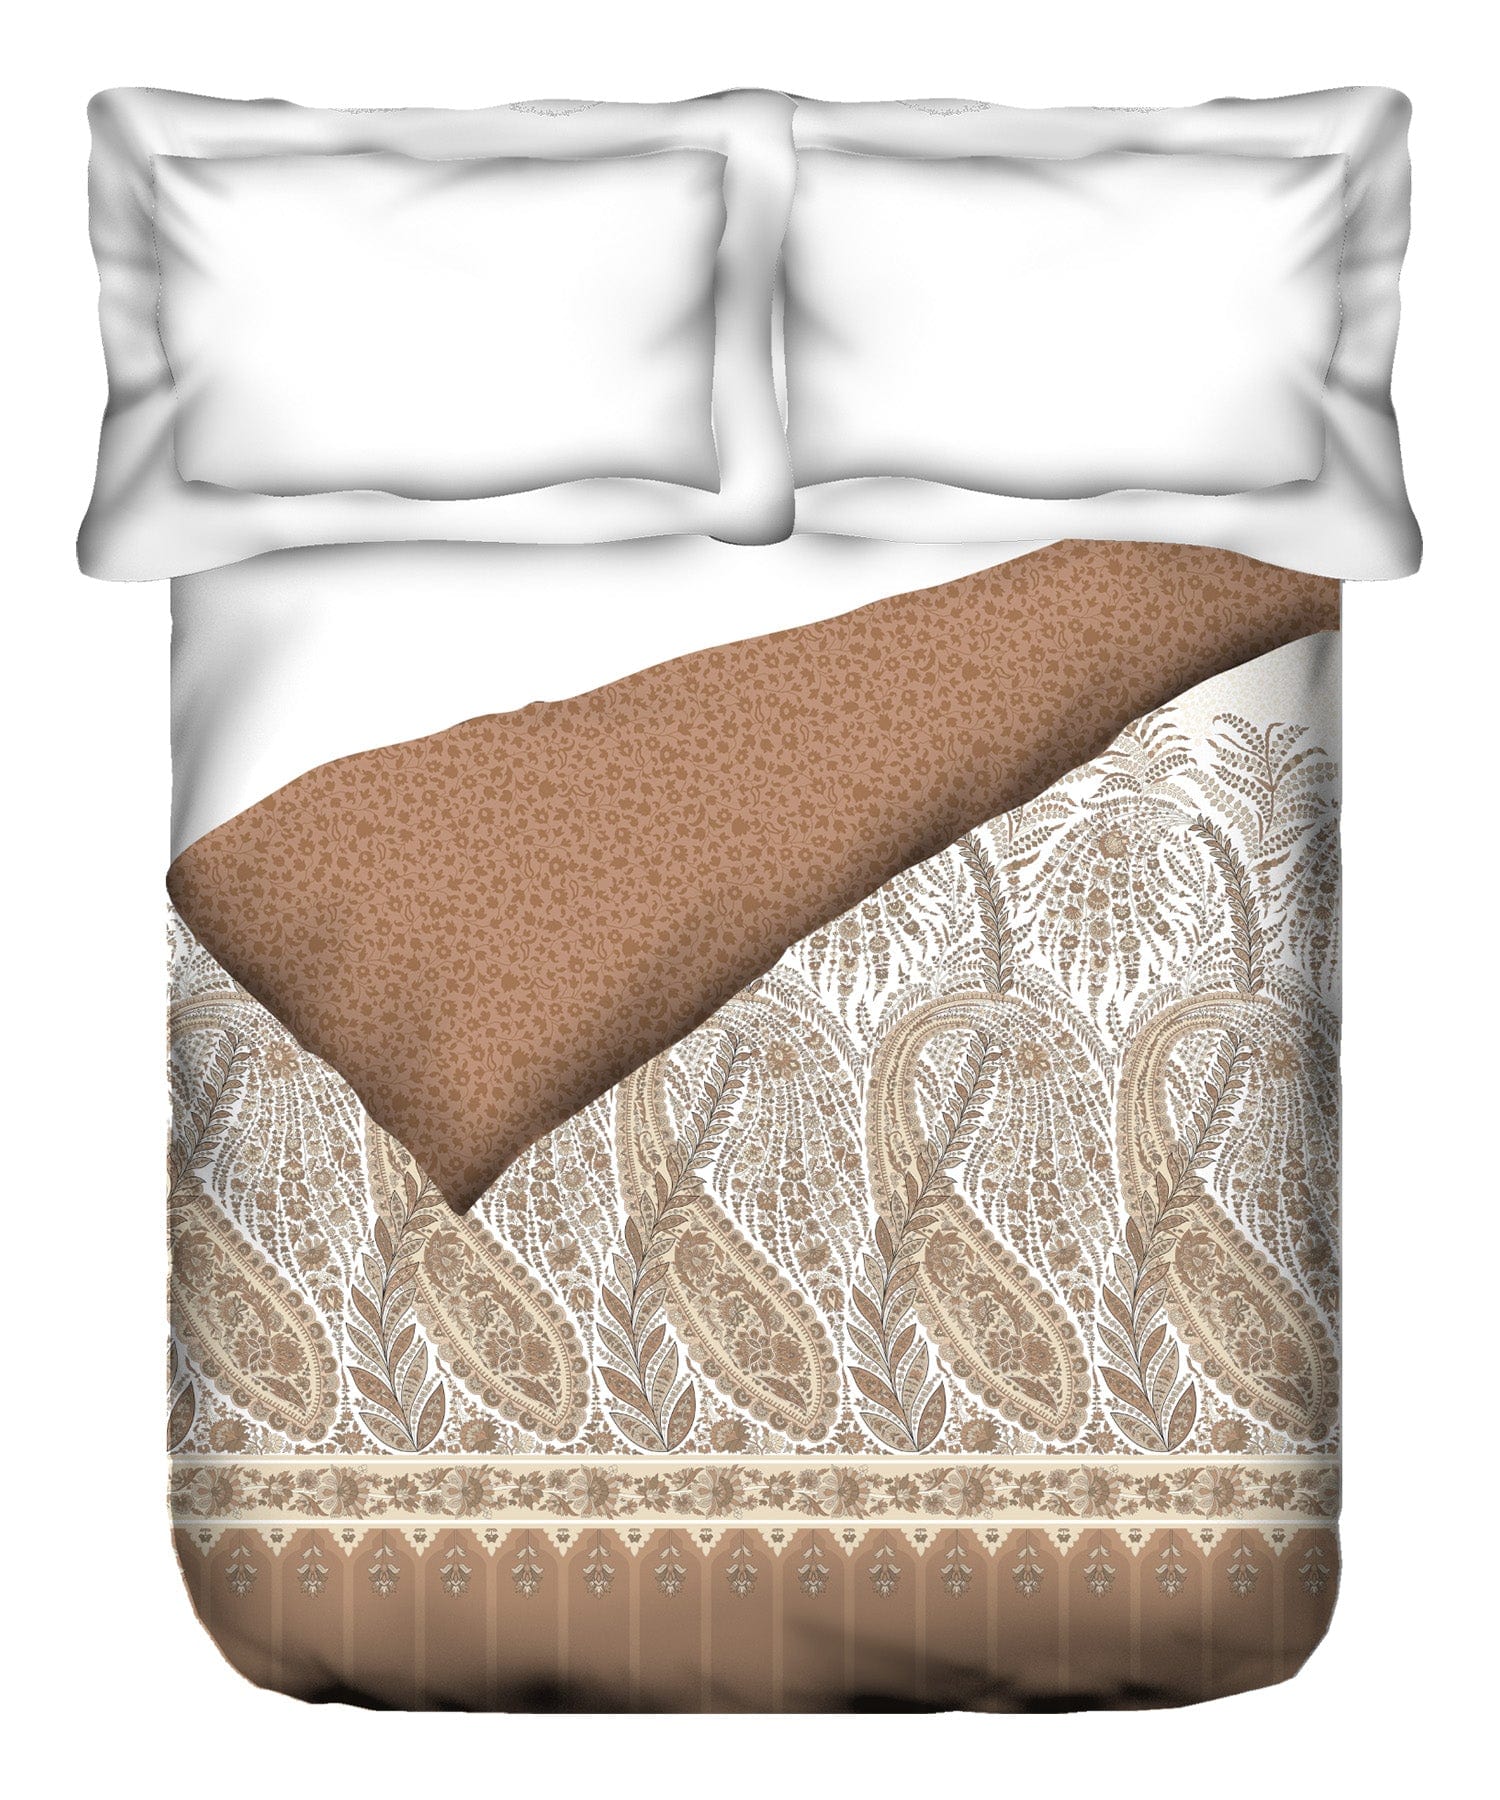 King Comforter ₹3599/-